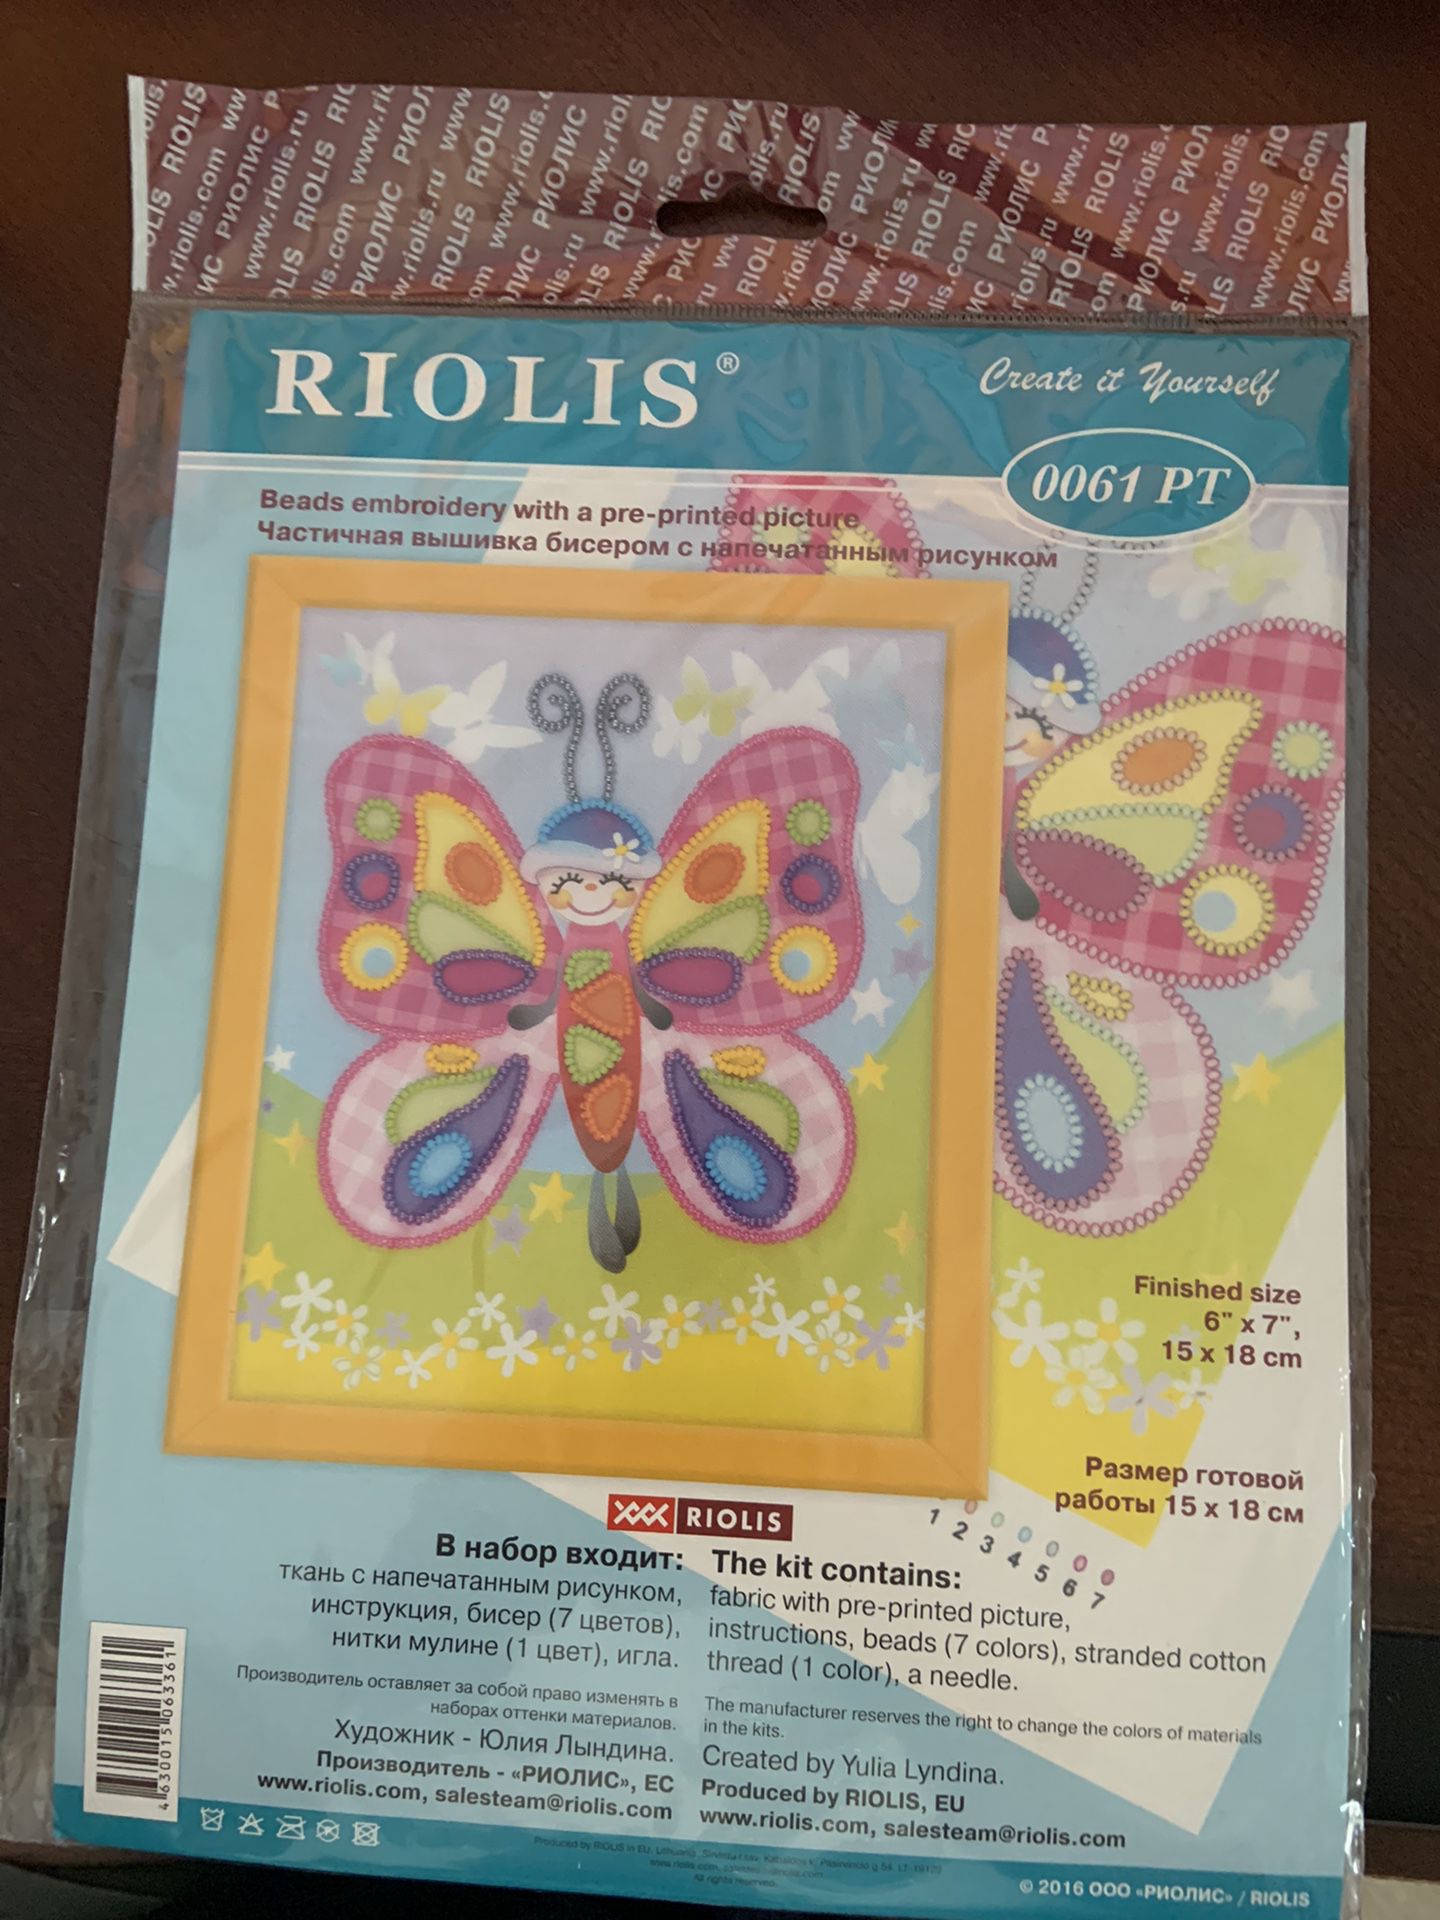 Riolis bead embroidery kit